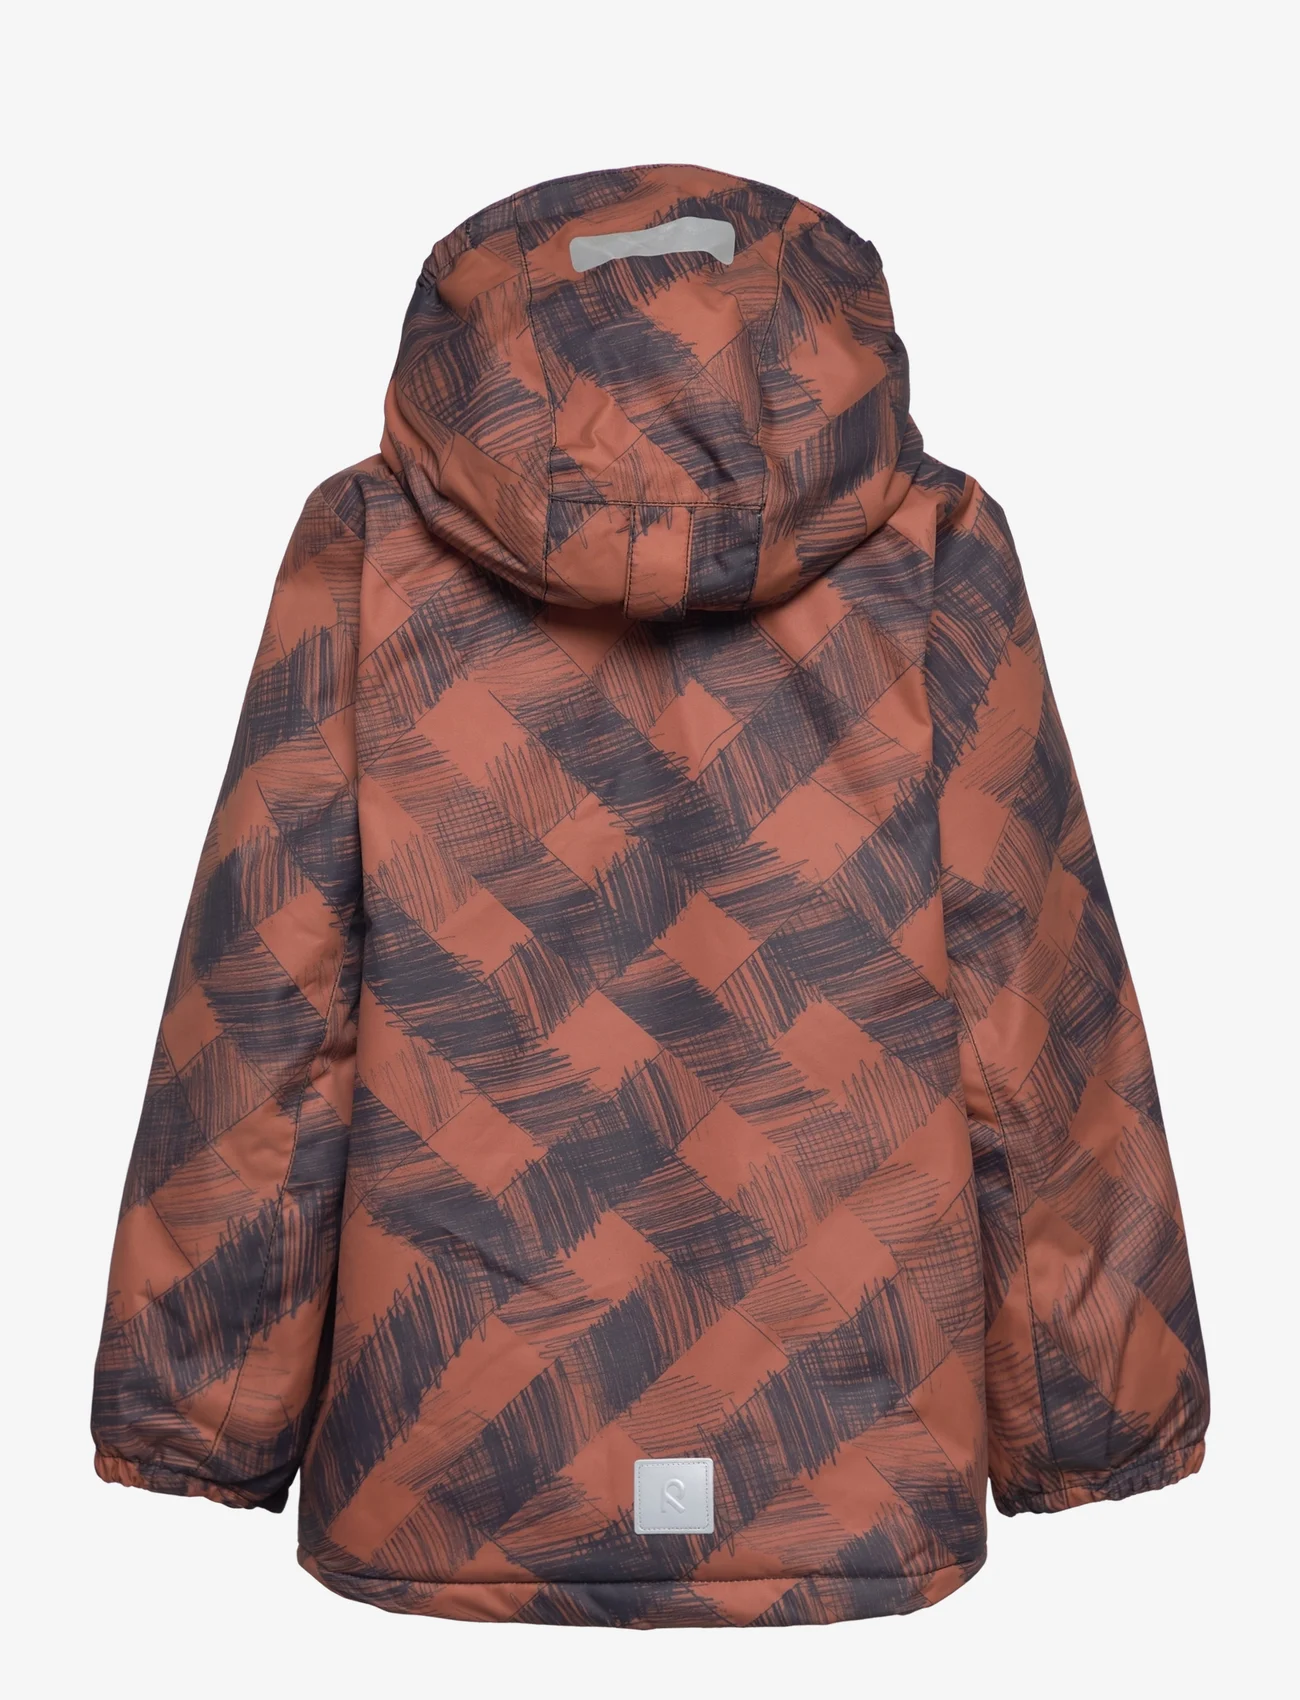 Reima - Winter jacket, Nuotio - kurtki zimowe - cinnamon brown - 1